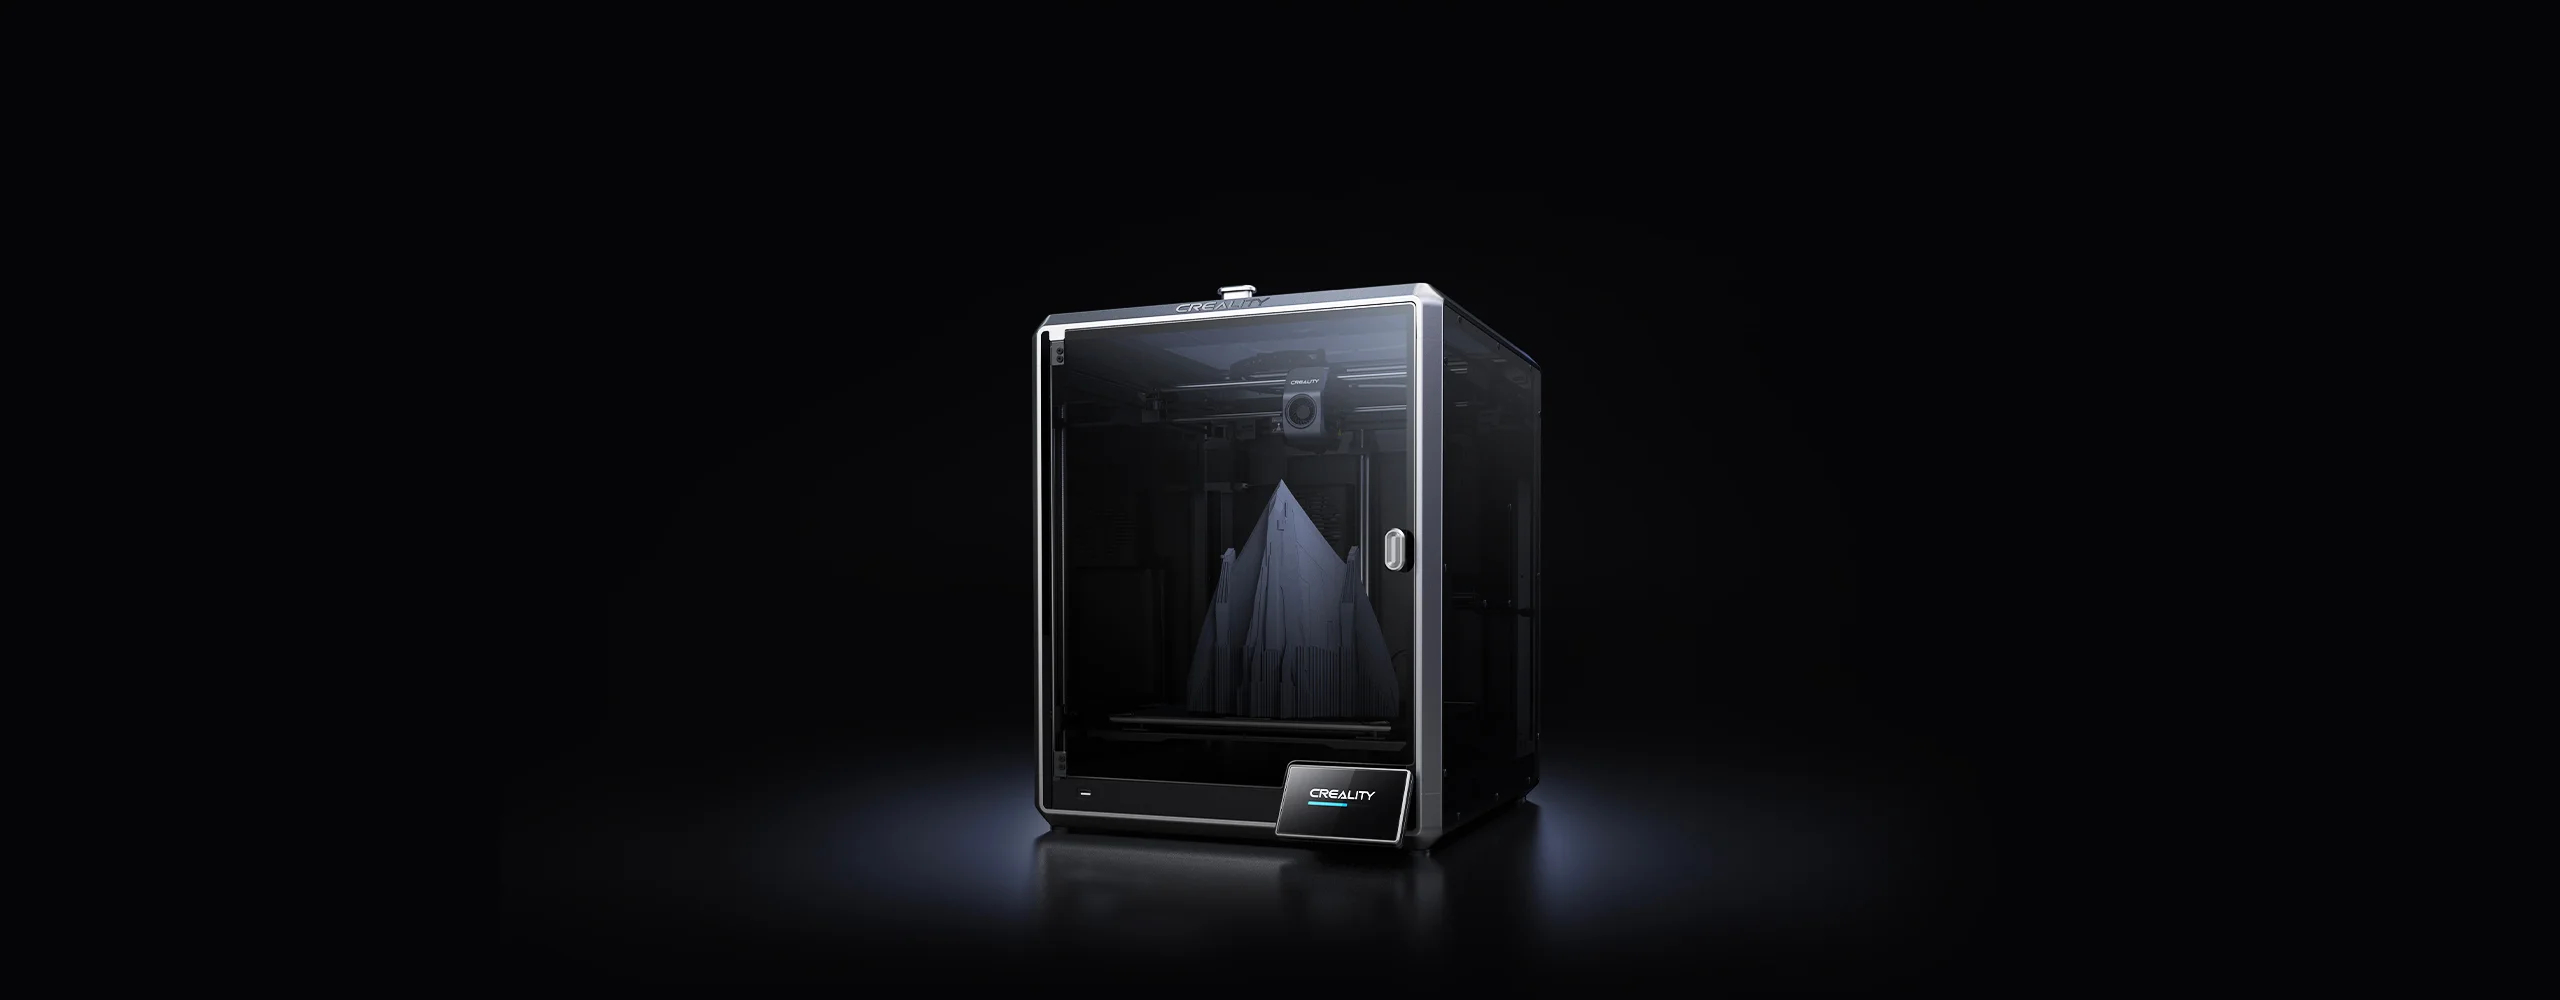 Creality K1 Max 3D printer